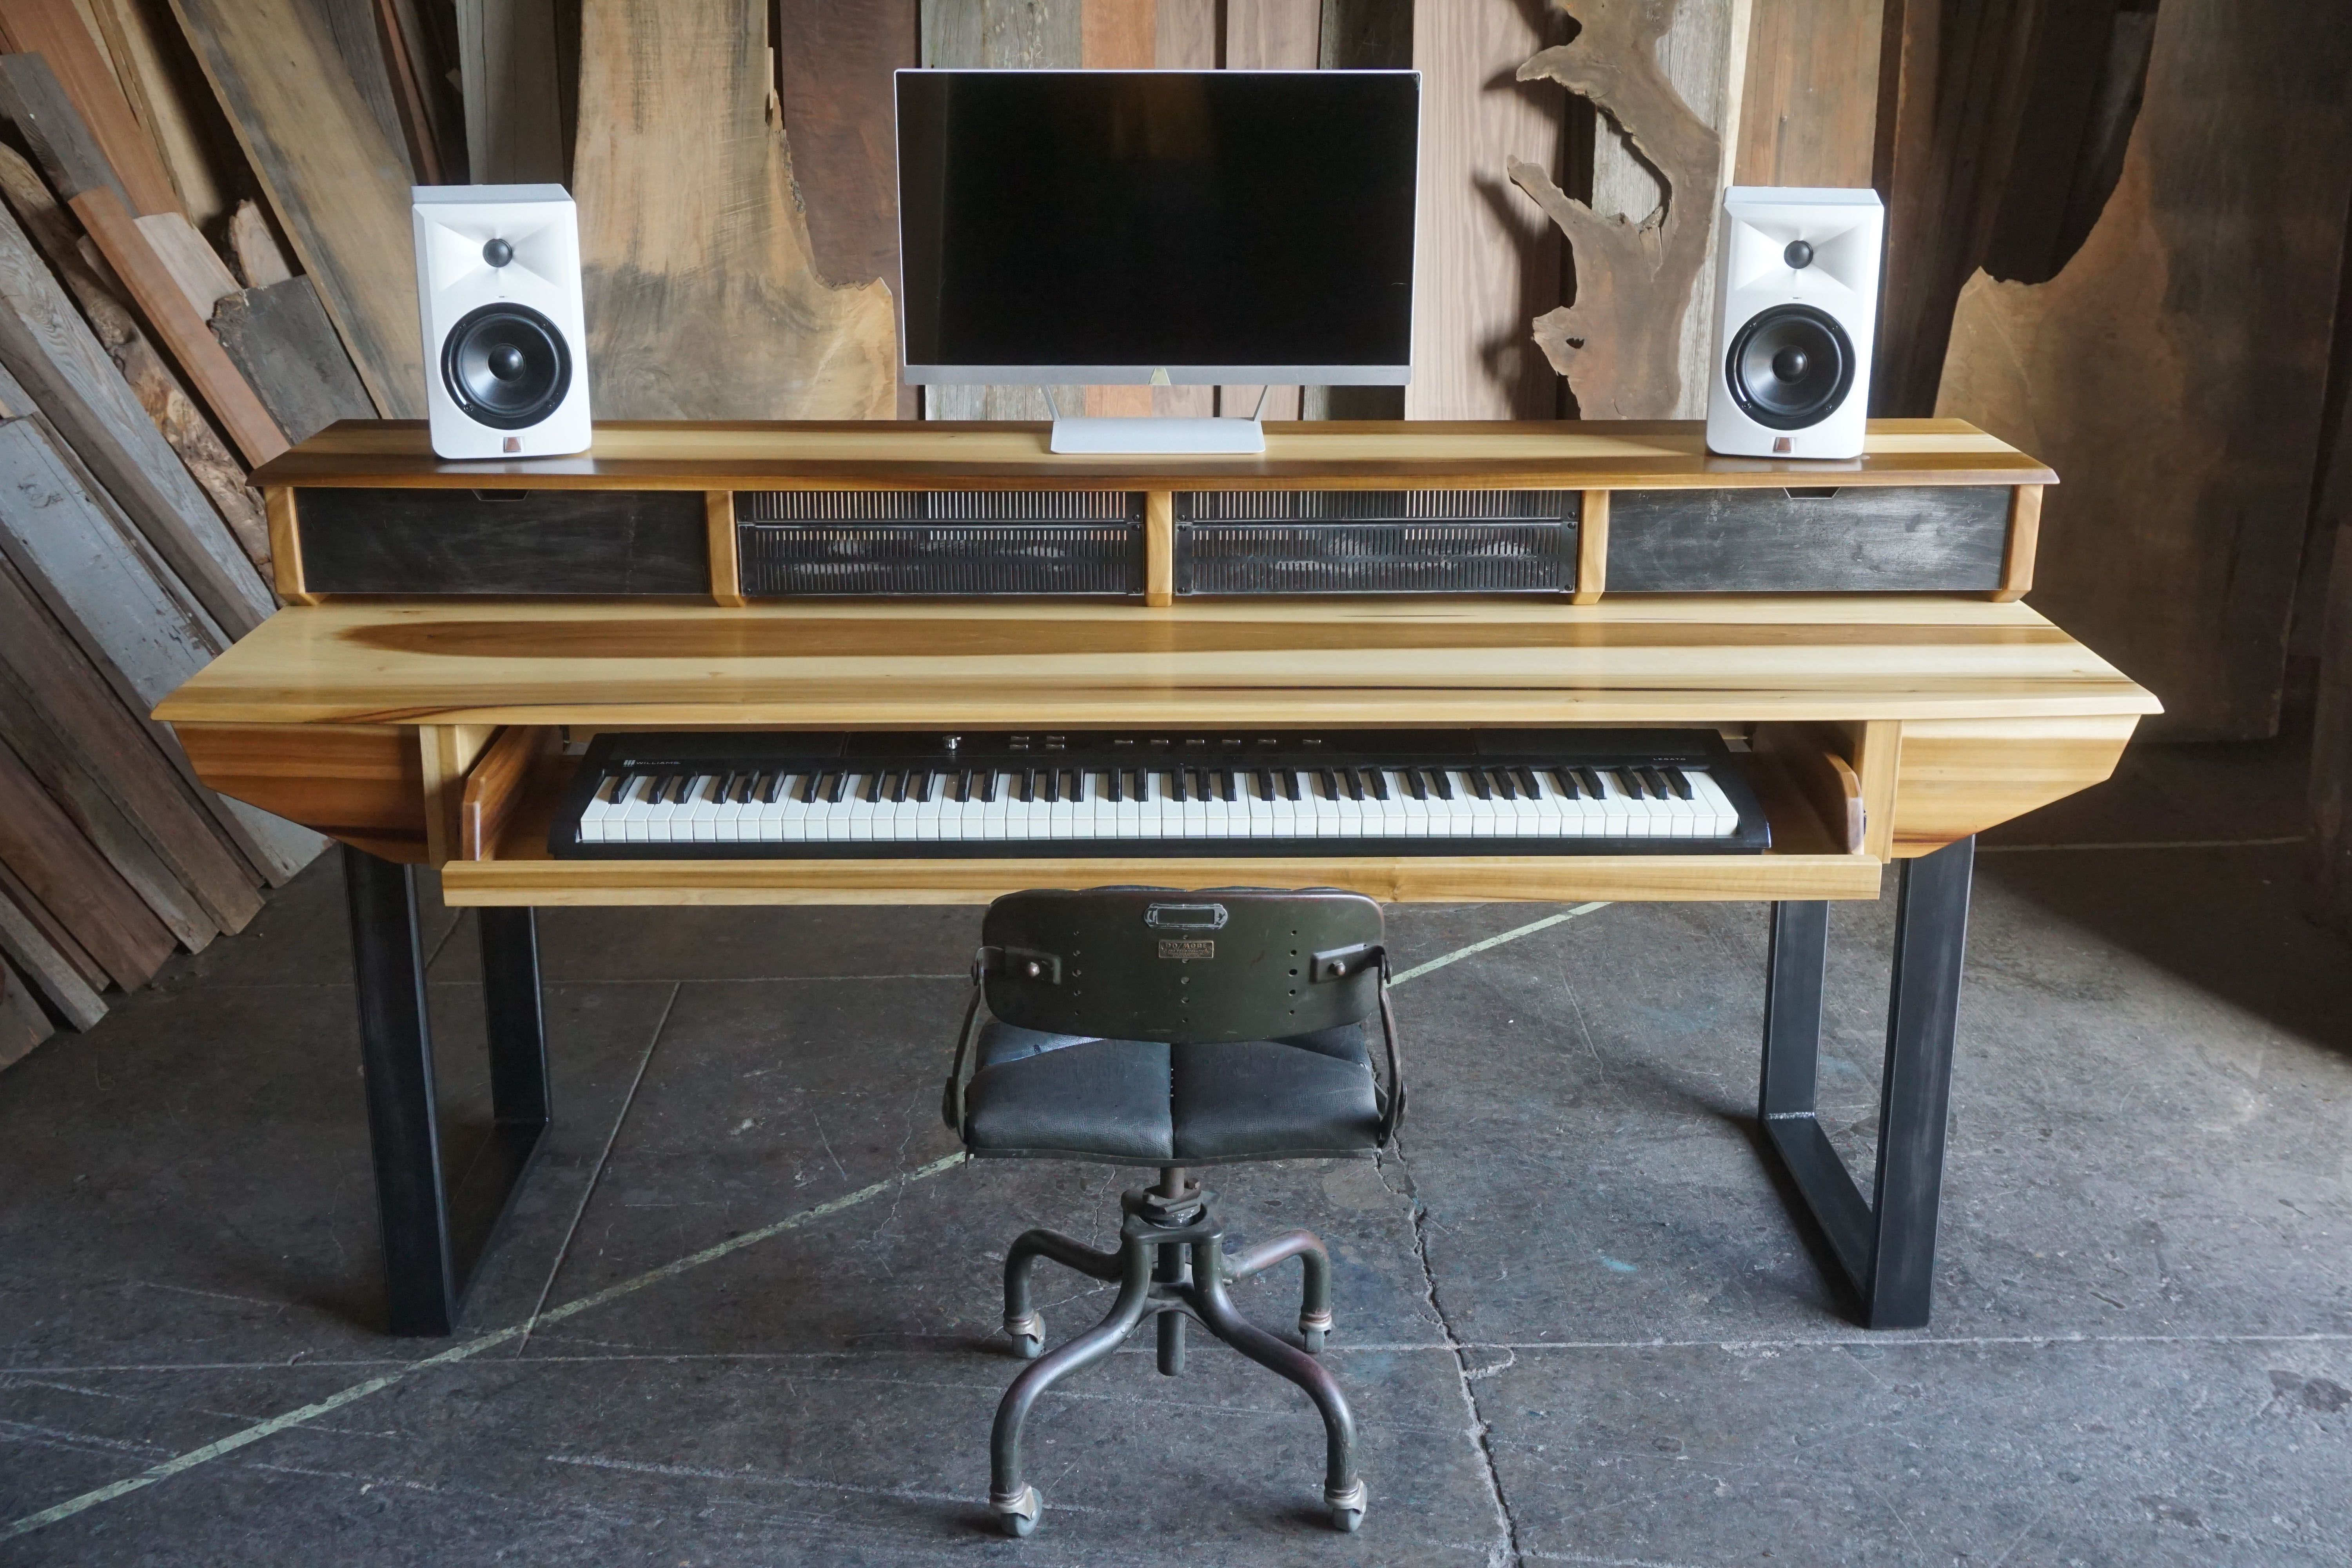 Handmade Custom Studio Desk For Audio + Video Production W/ Keyboard  Workstation Shelf And Rack Units by Monkwood 